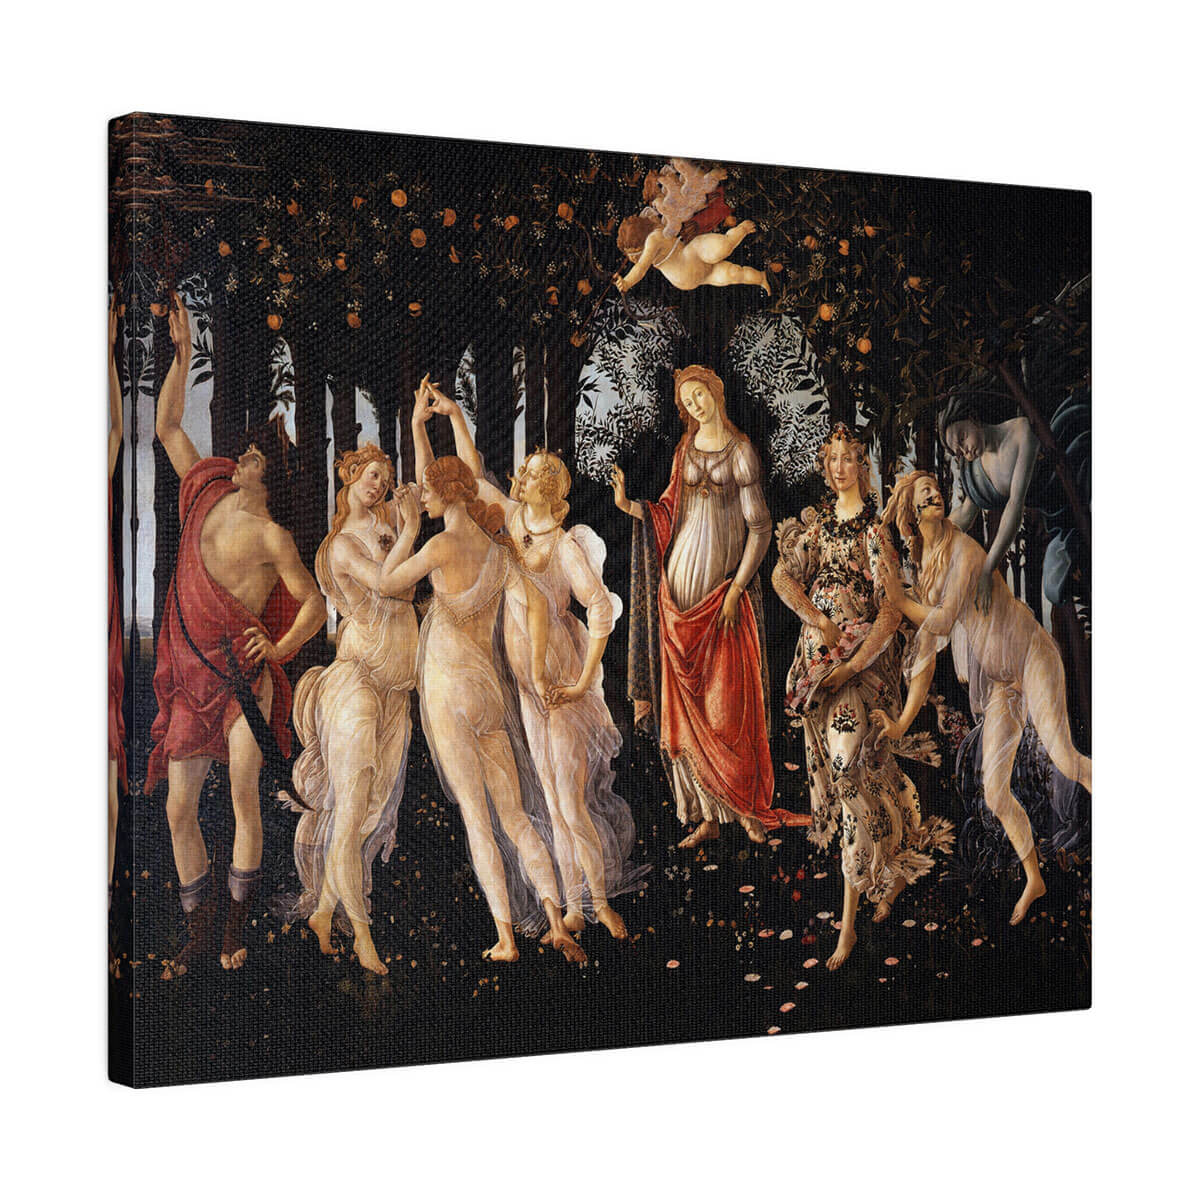 Captures the essence of Botticelli's La Primavera masterpiece